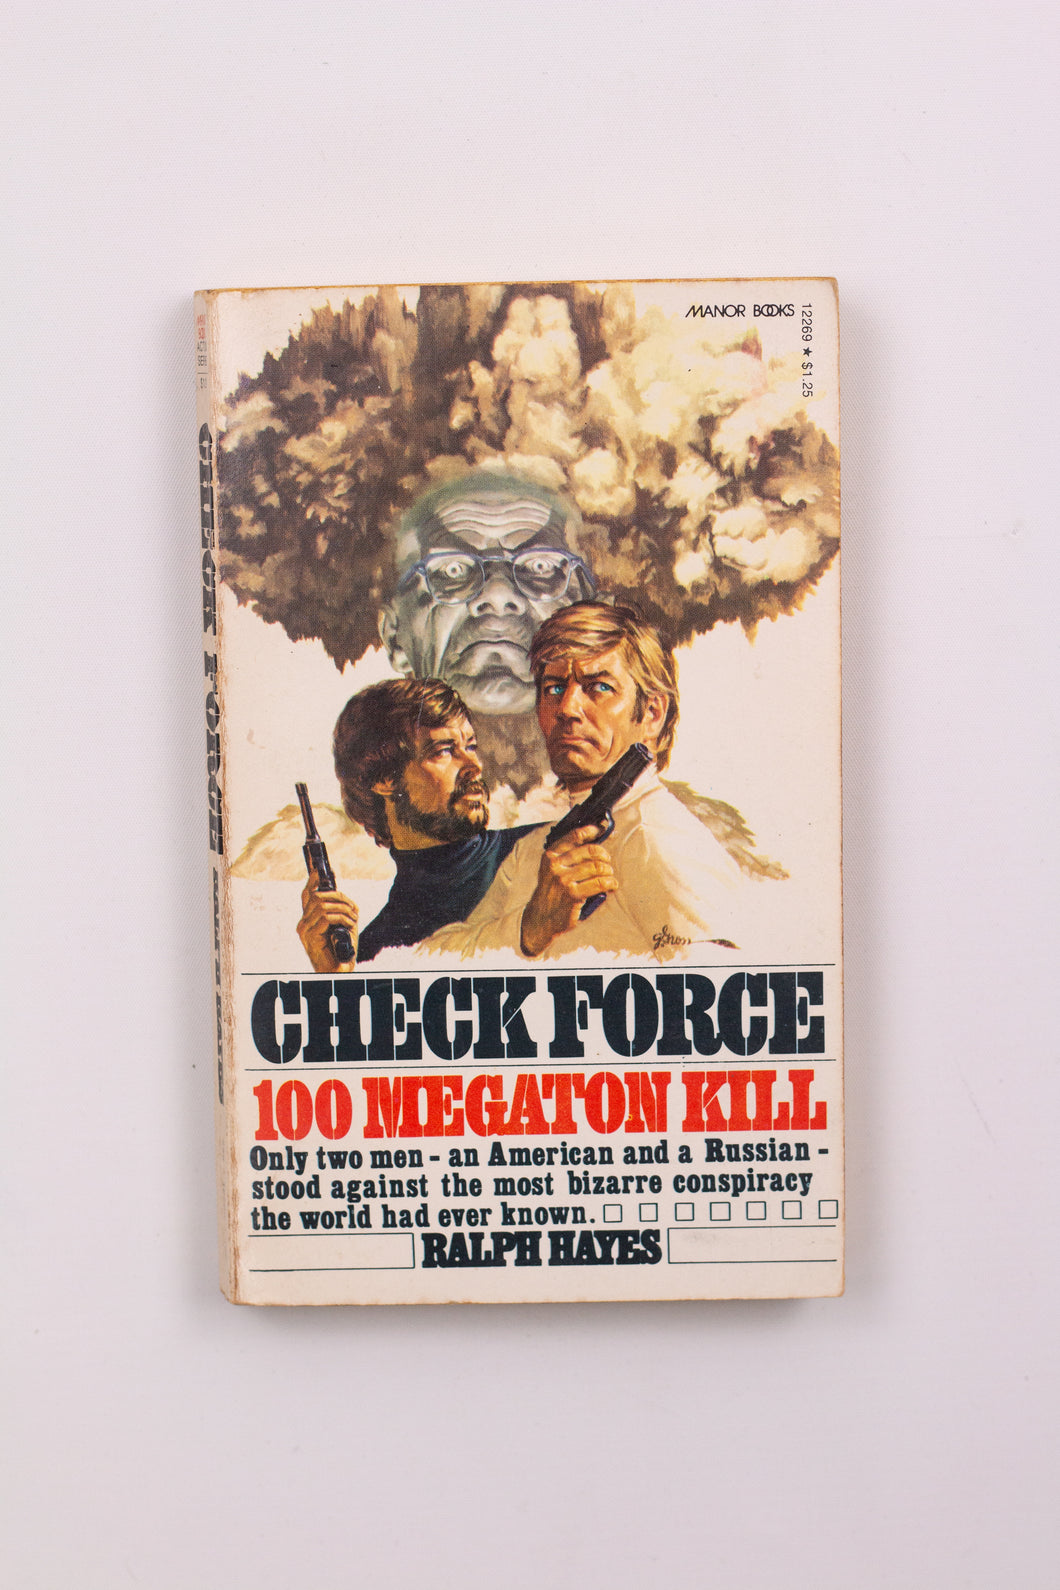 CHECK FORCE: 100 MEGATON KILL BOOK